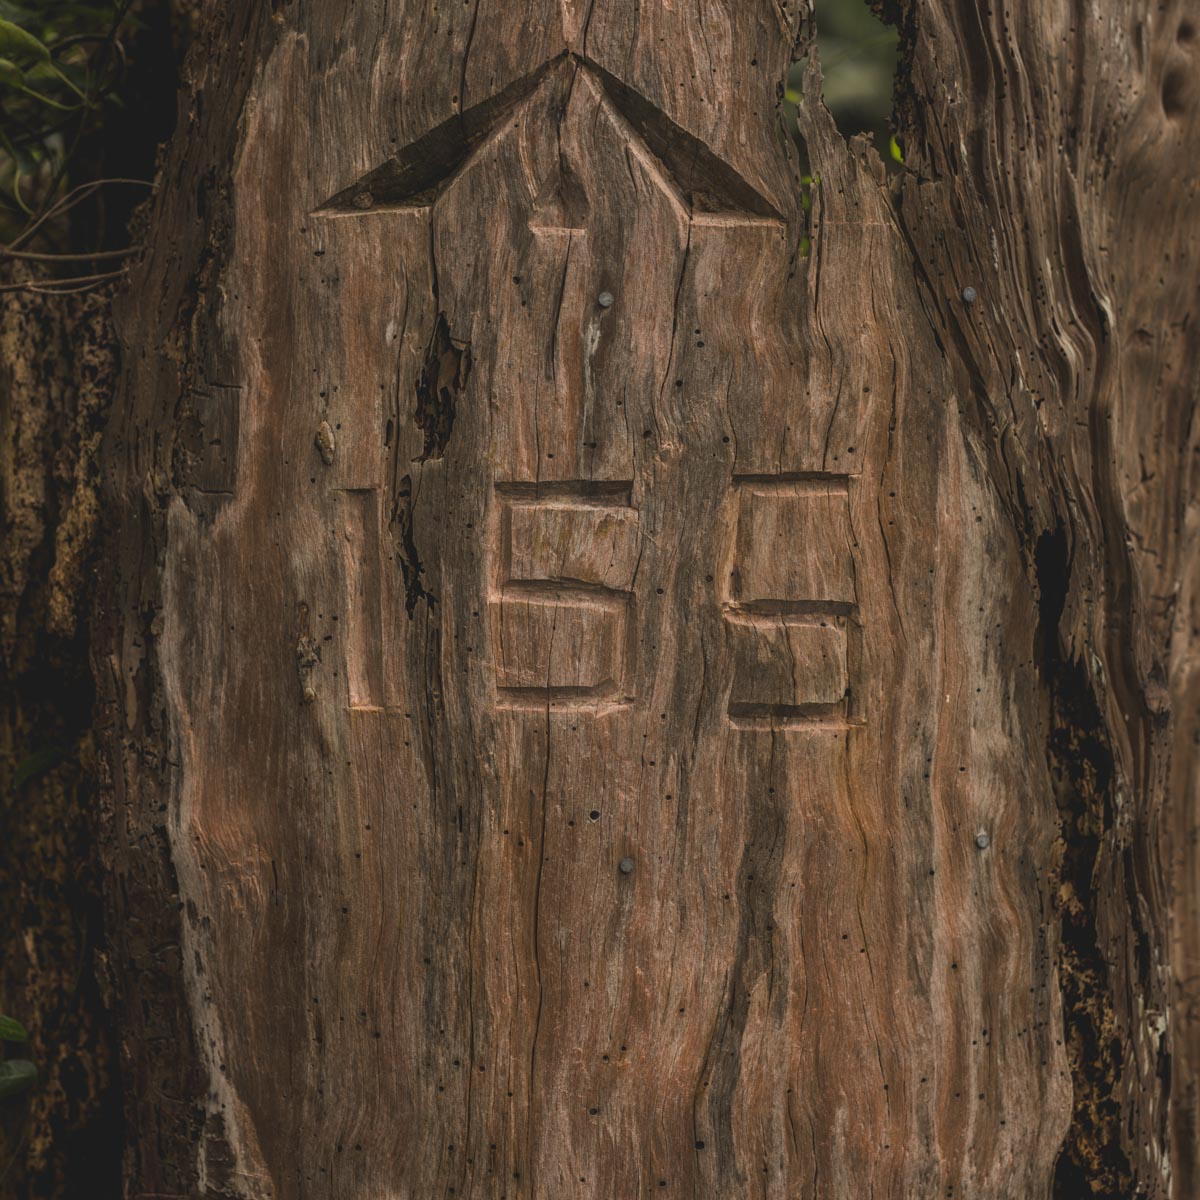 Chelsea Scott Photo - Heritage - Tree engraving Old Settlement